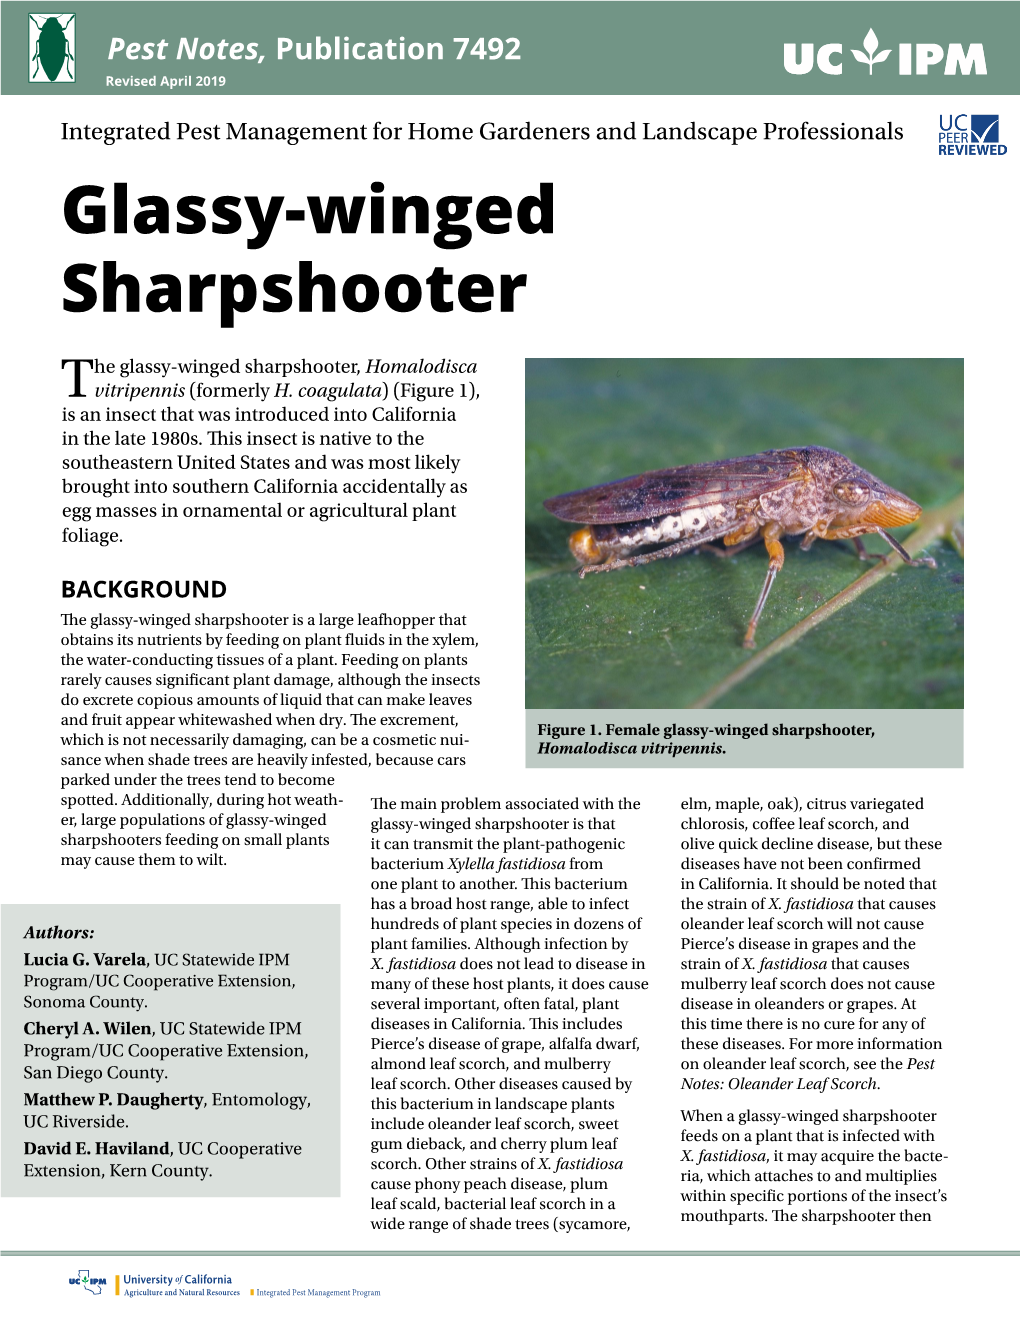 Glassy-Winged Sharpshooter